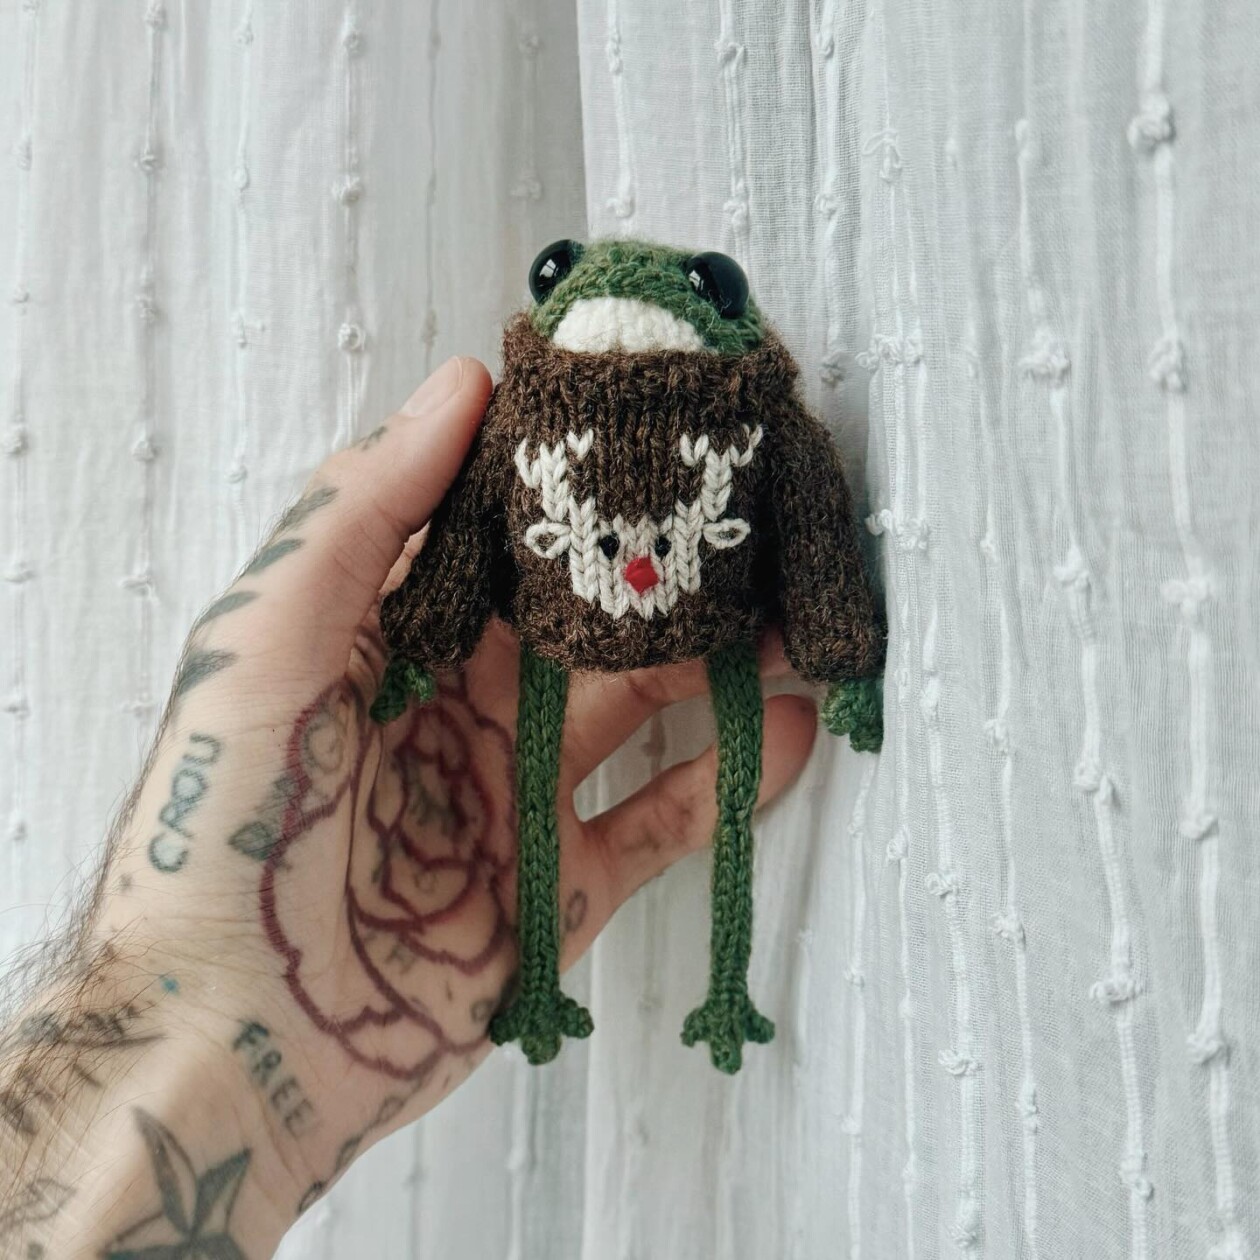 Enchanting Anthropomorphized Frog Crochet Patterns By Elliot (3)